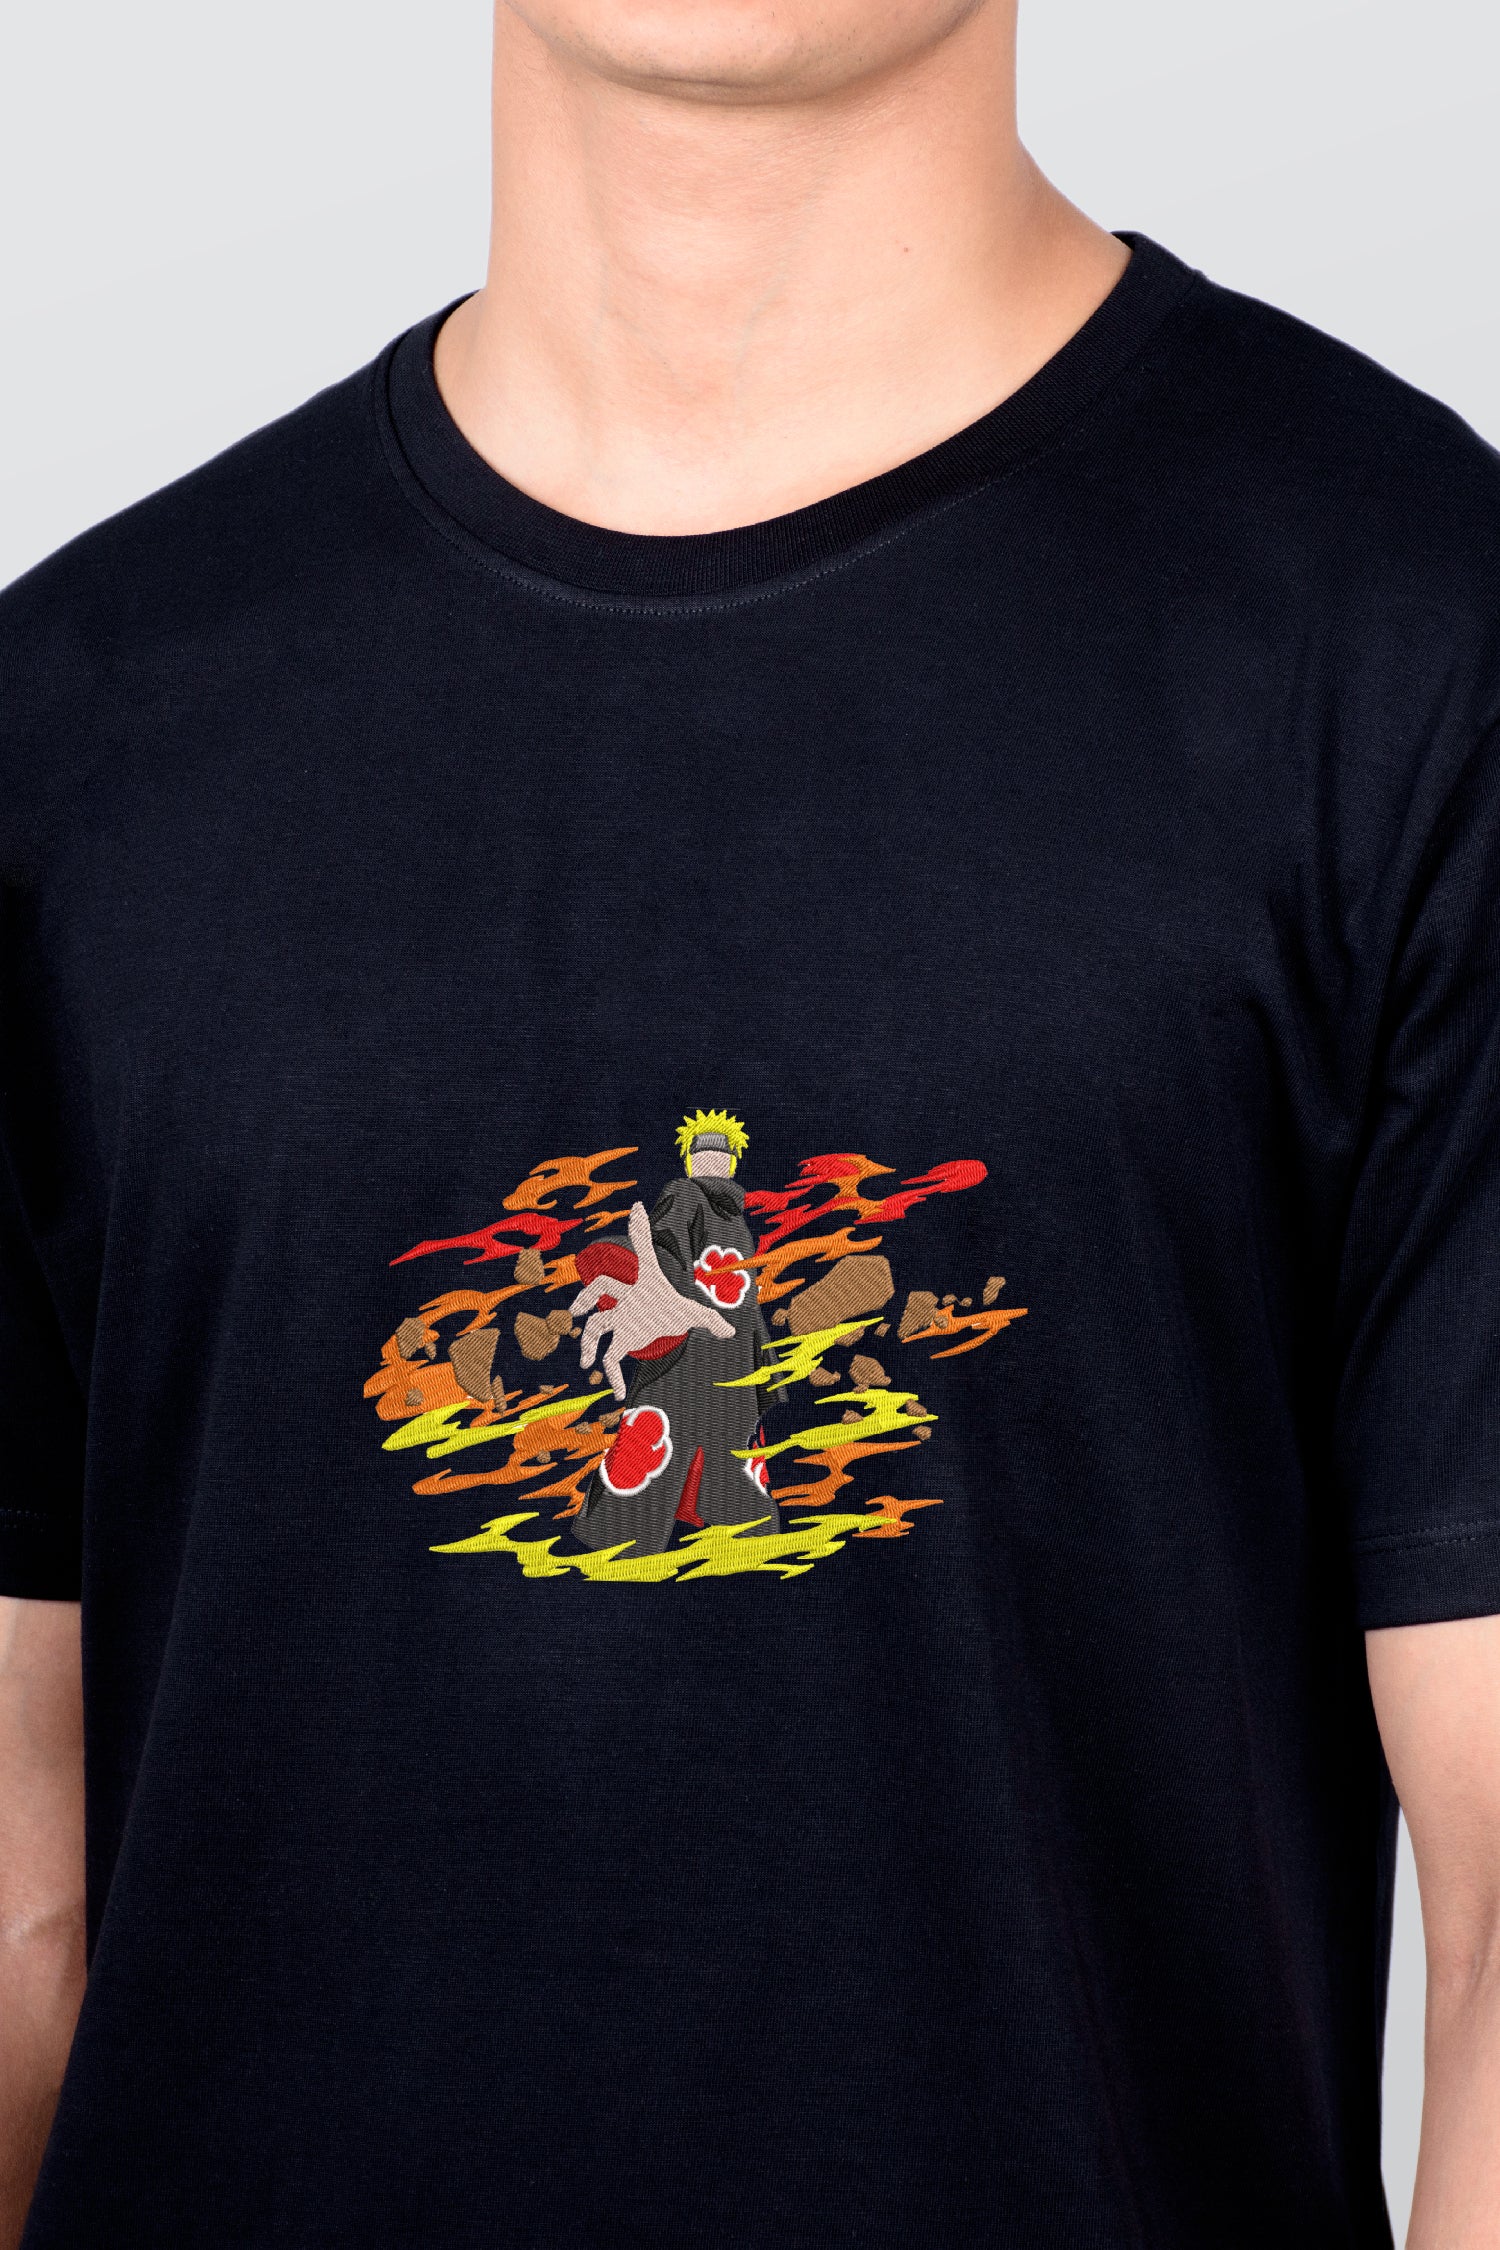 New Pain Naruto EmbroiderednT-shirt